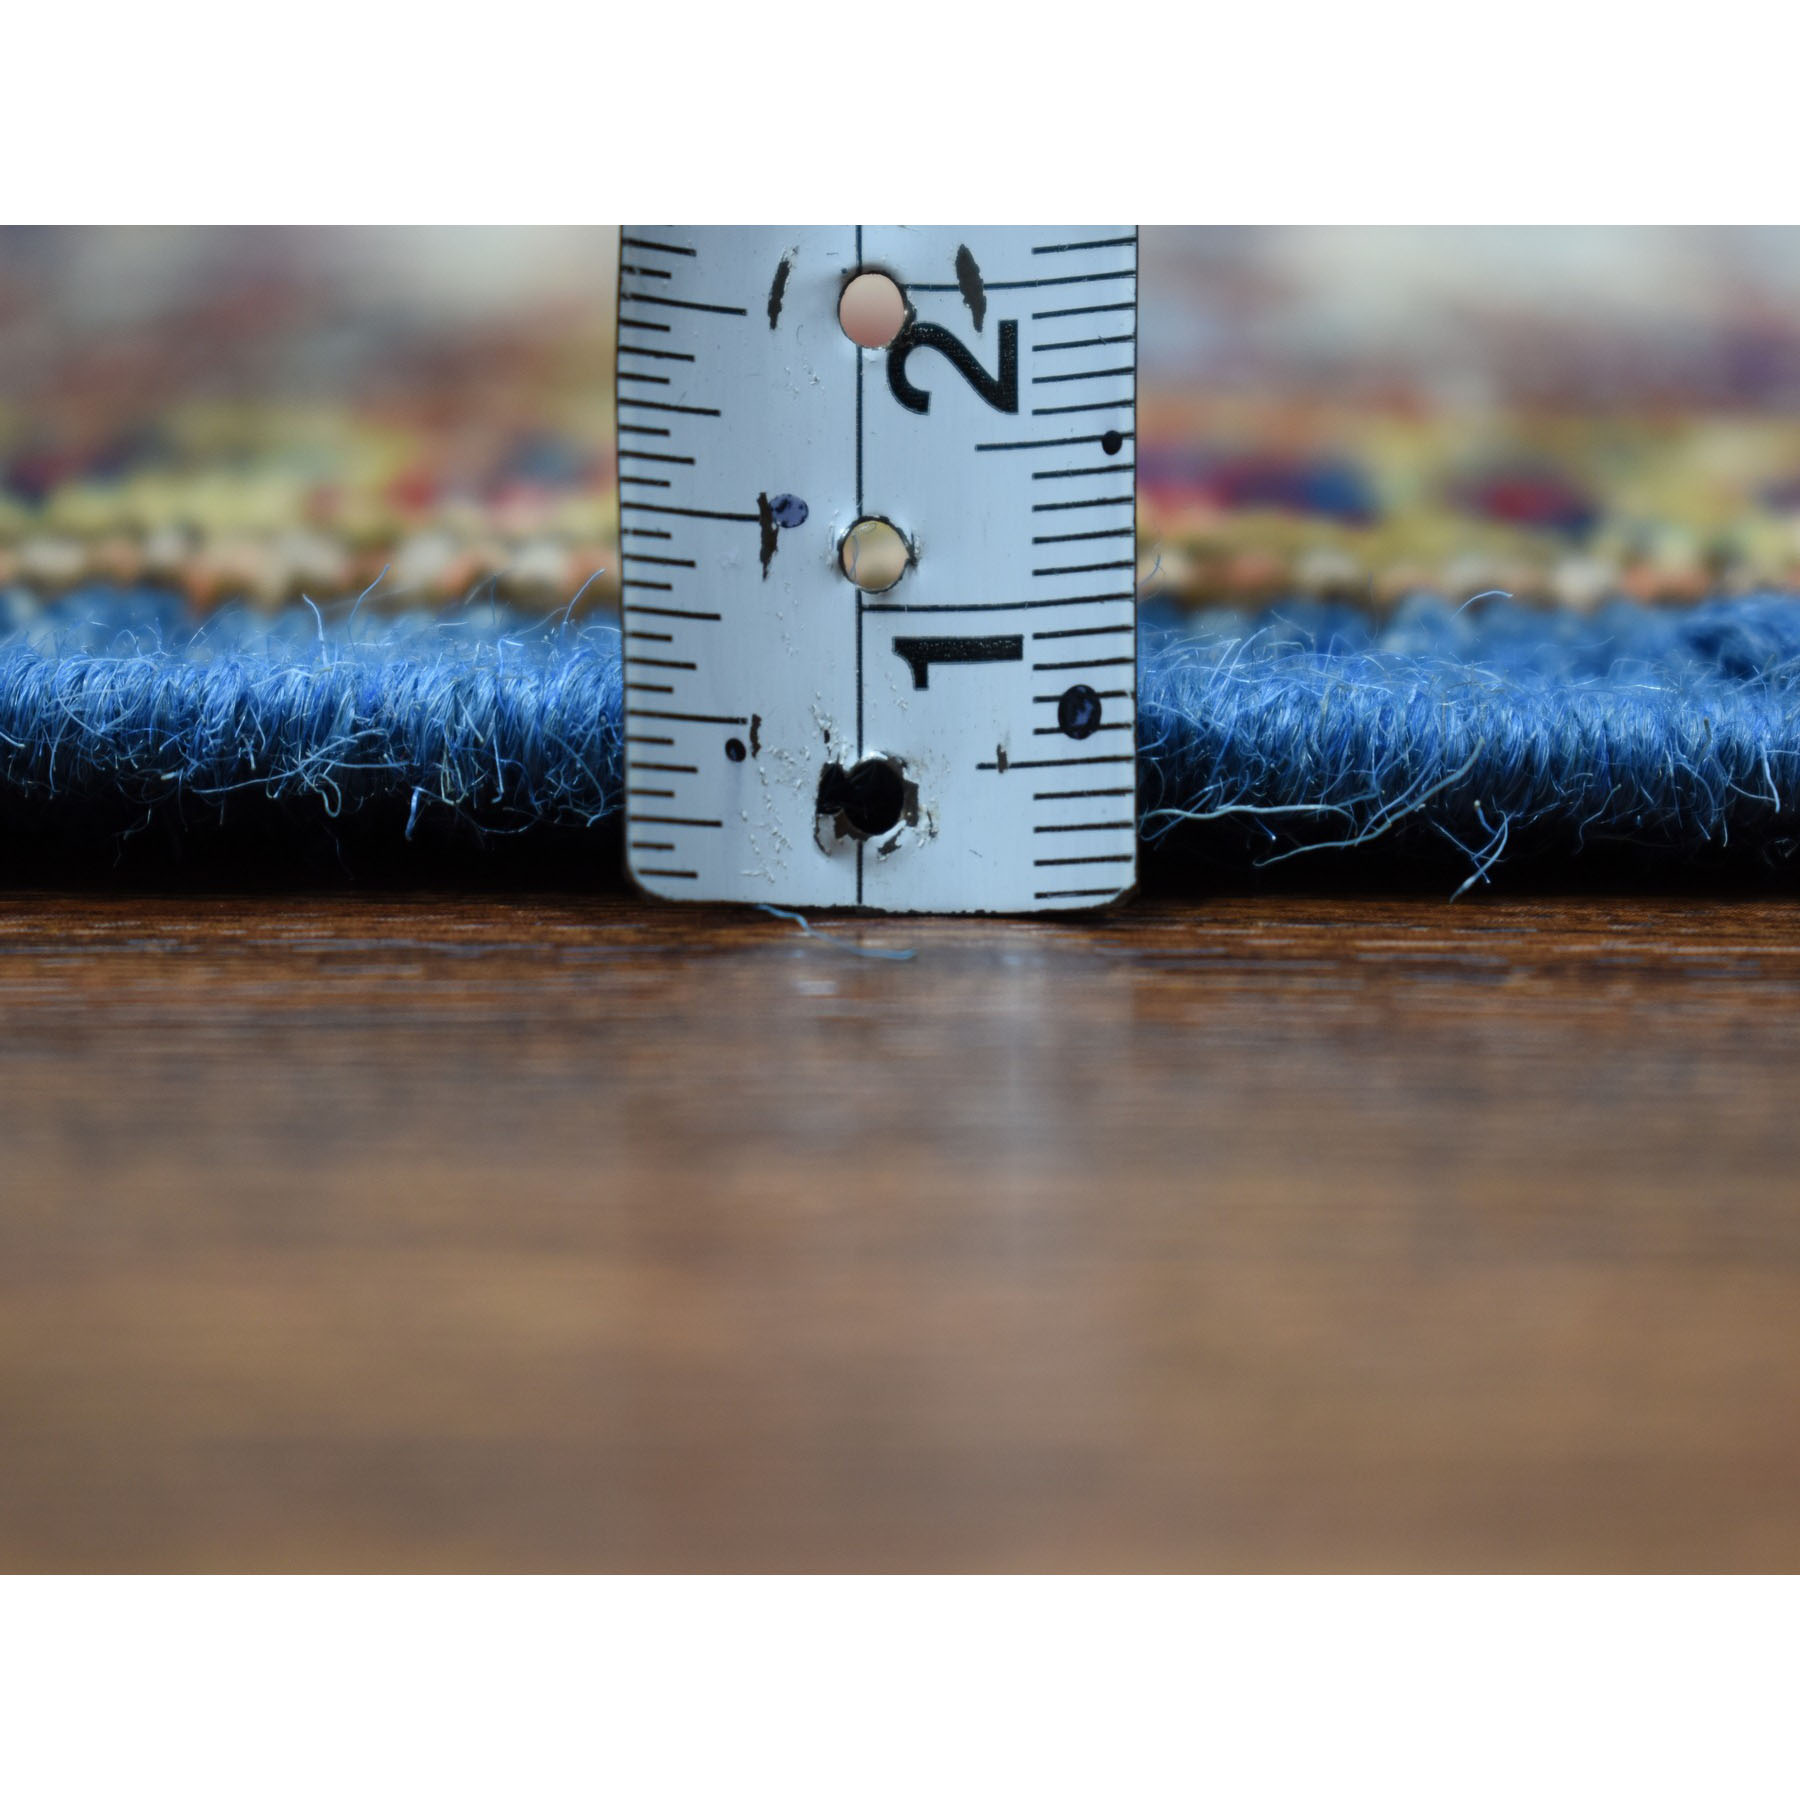 2'9"x4'2" Blue Super Kazak Pure Wool Geometric Design Hand Woven Oriental Rug 